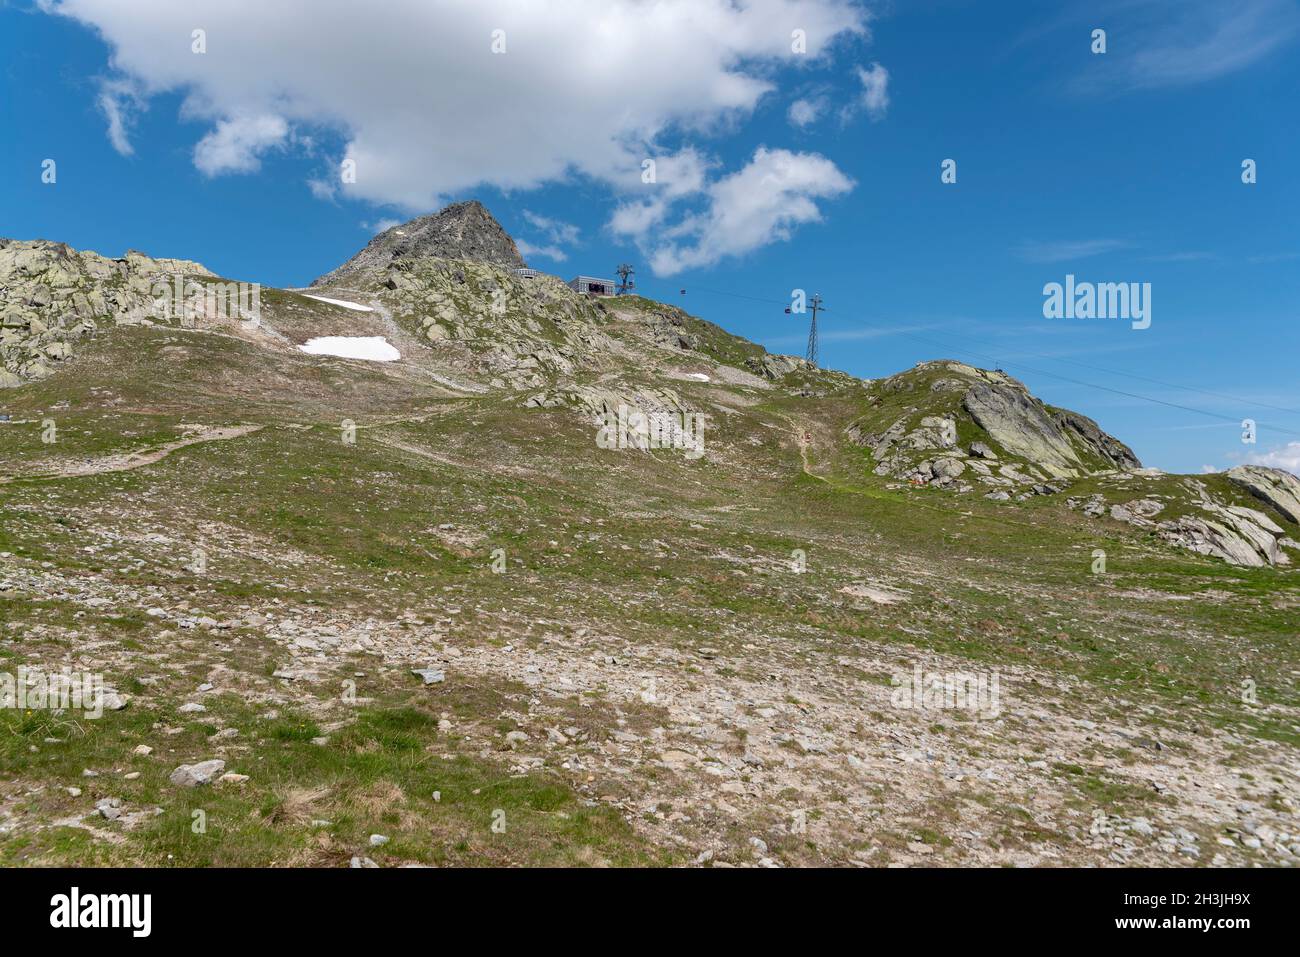 Landscape with the Bettmerhorn mountain, Bettmeralp, Valais, Switzerland, Europe Stock Photo